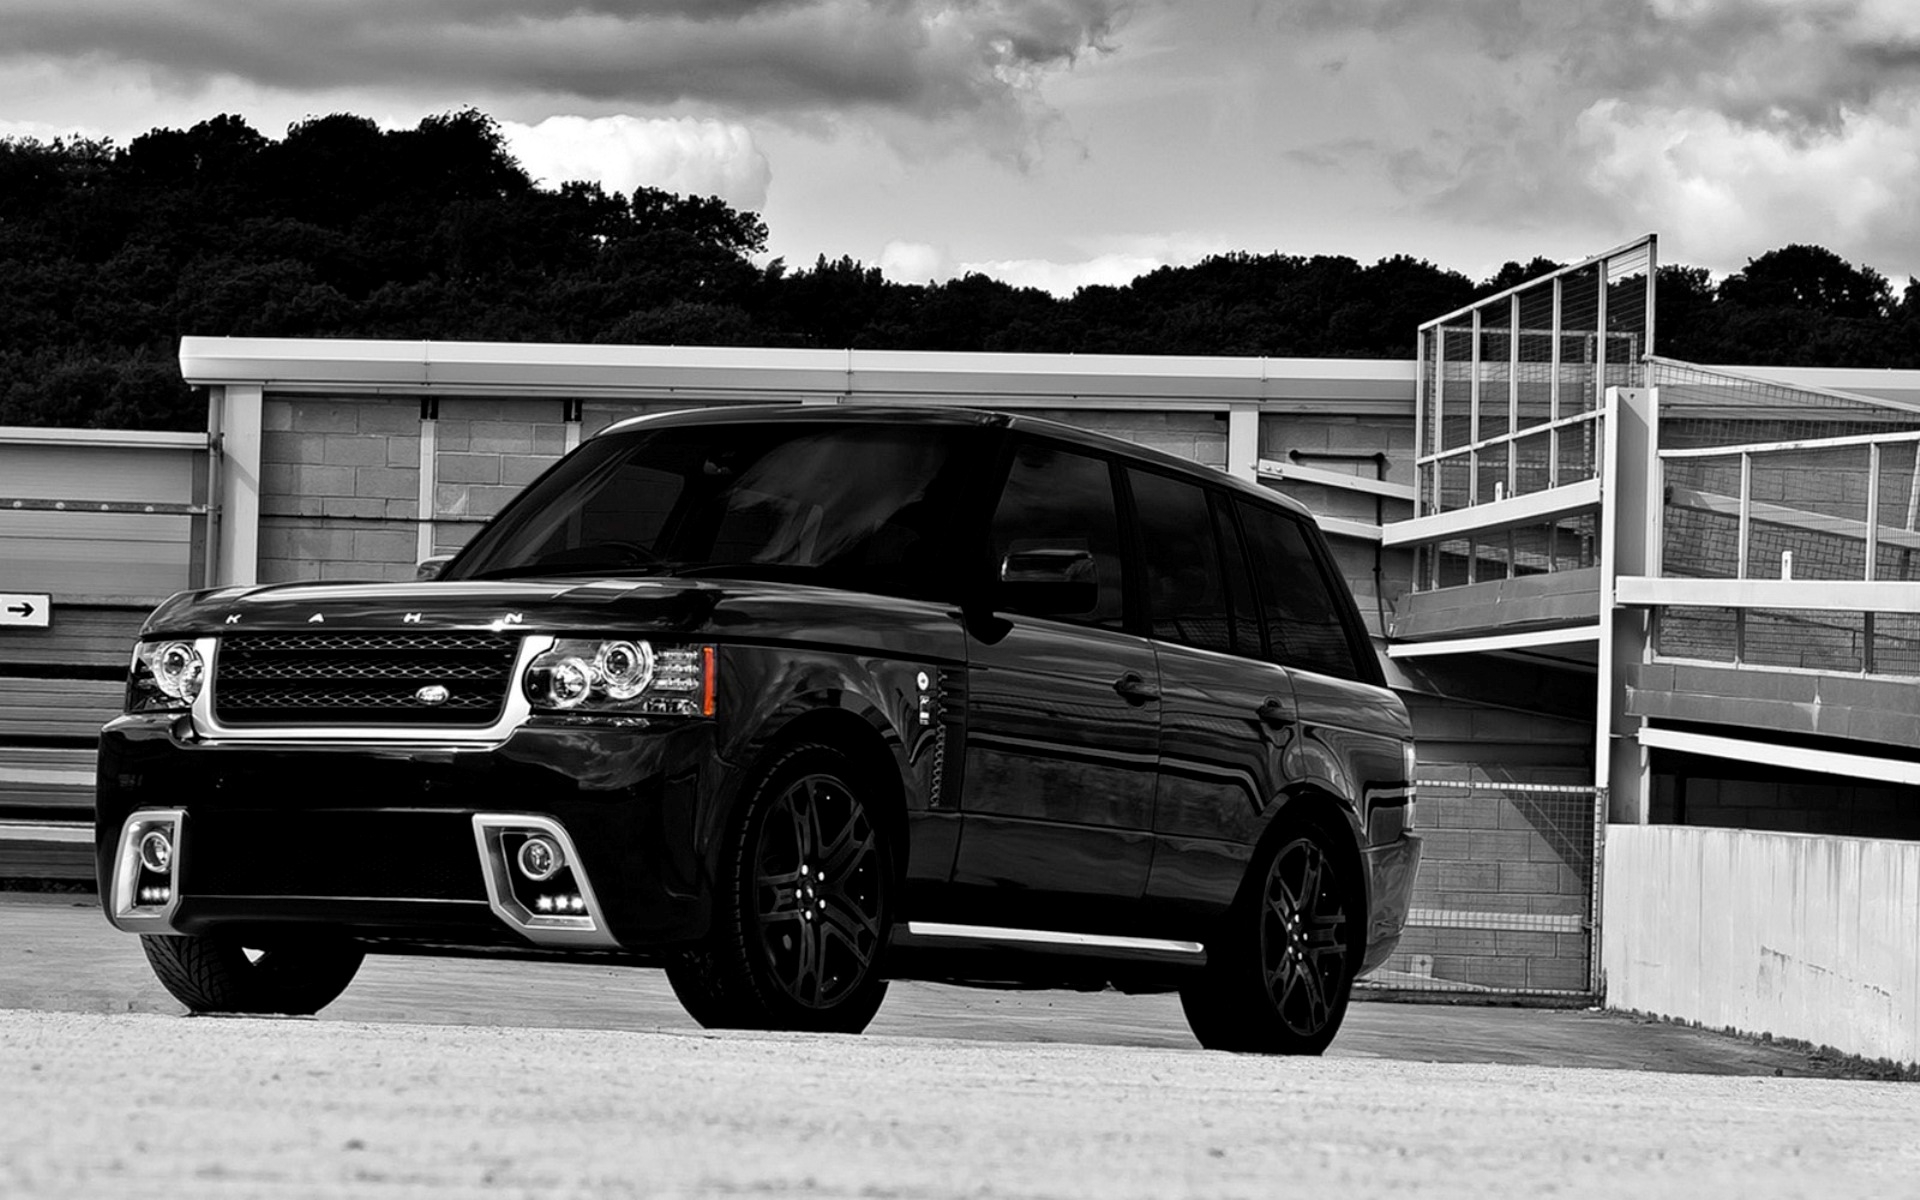 Black Range Rover Car Hd Images